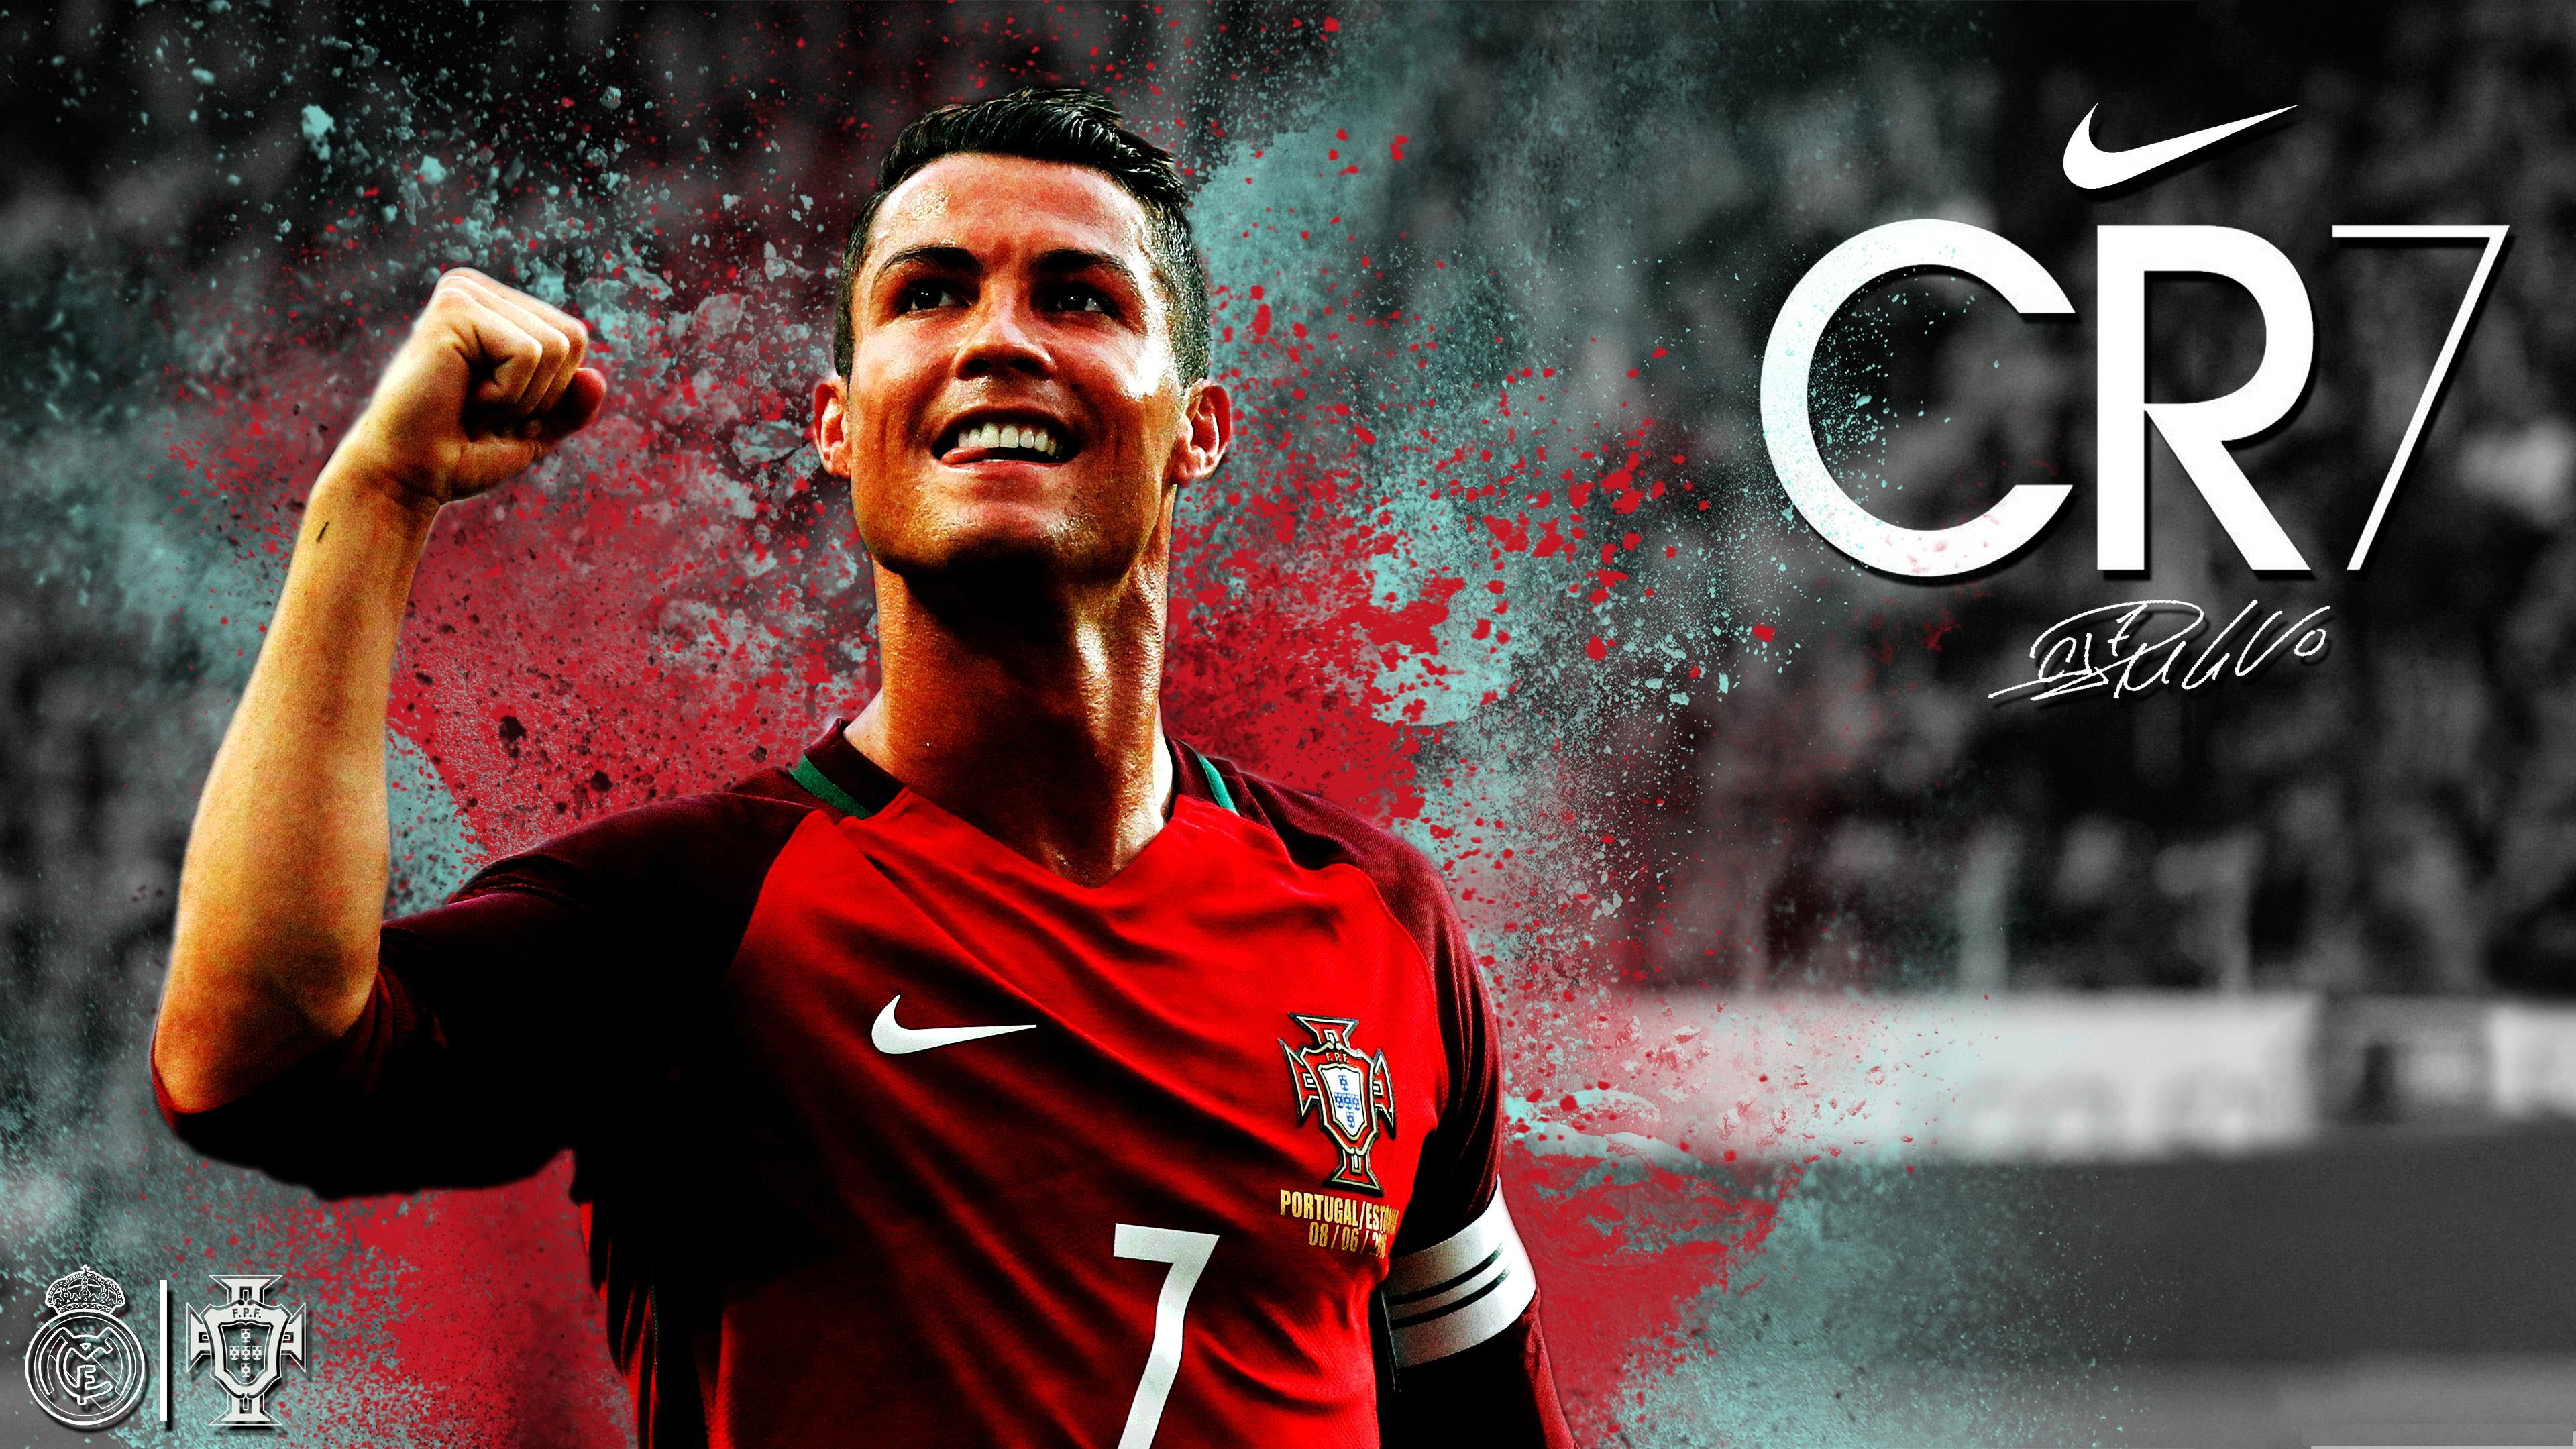 Cristiano Ronaldo Football Player HD wallpaper